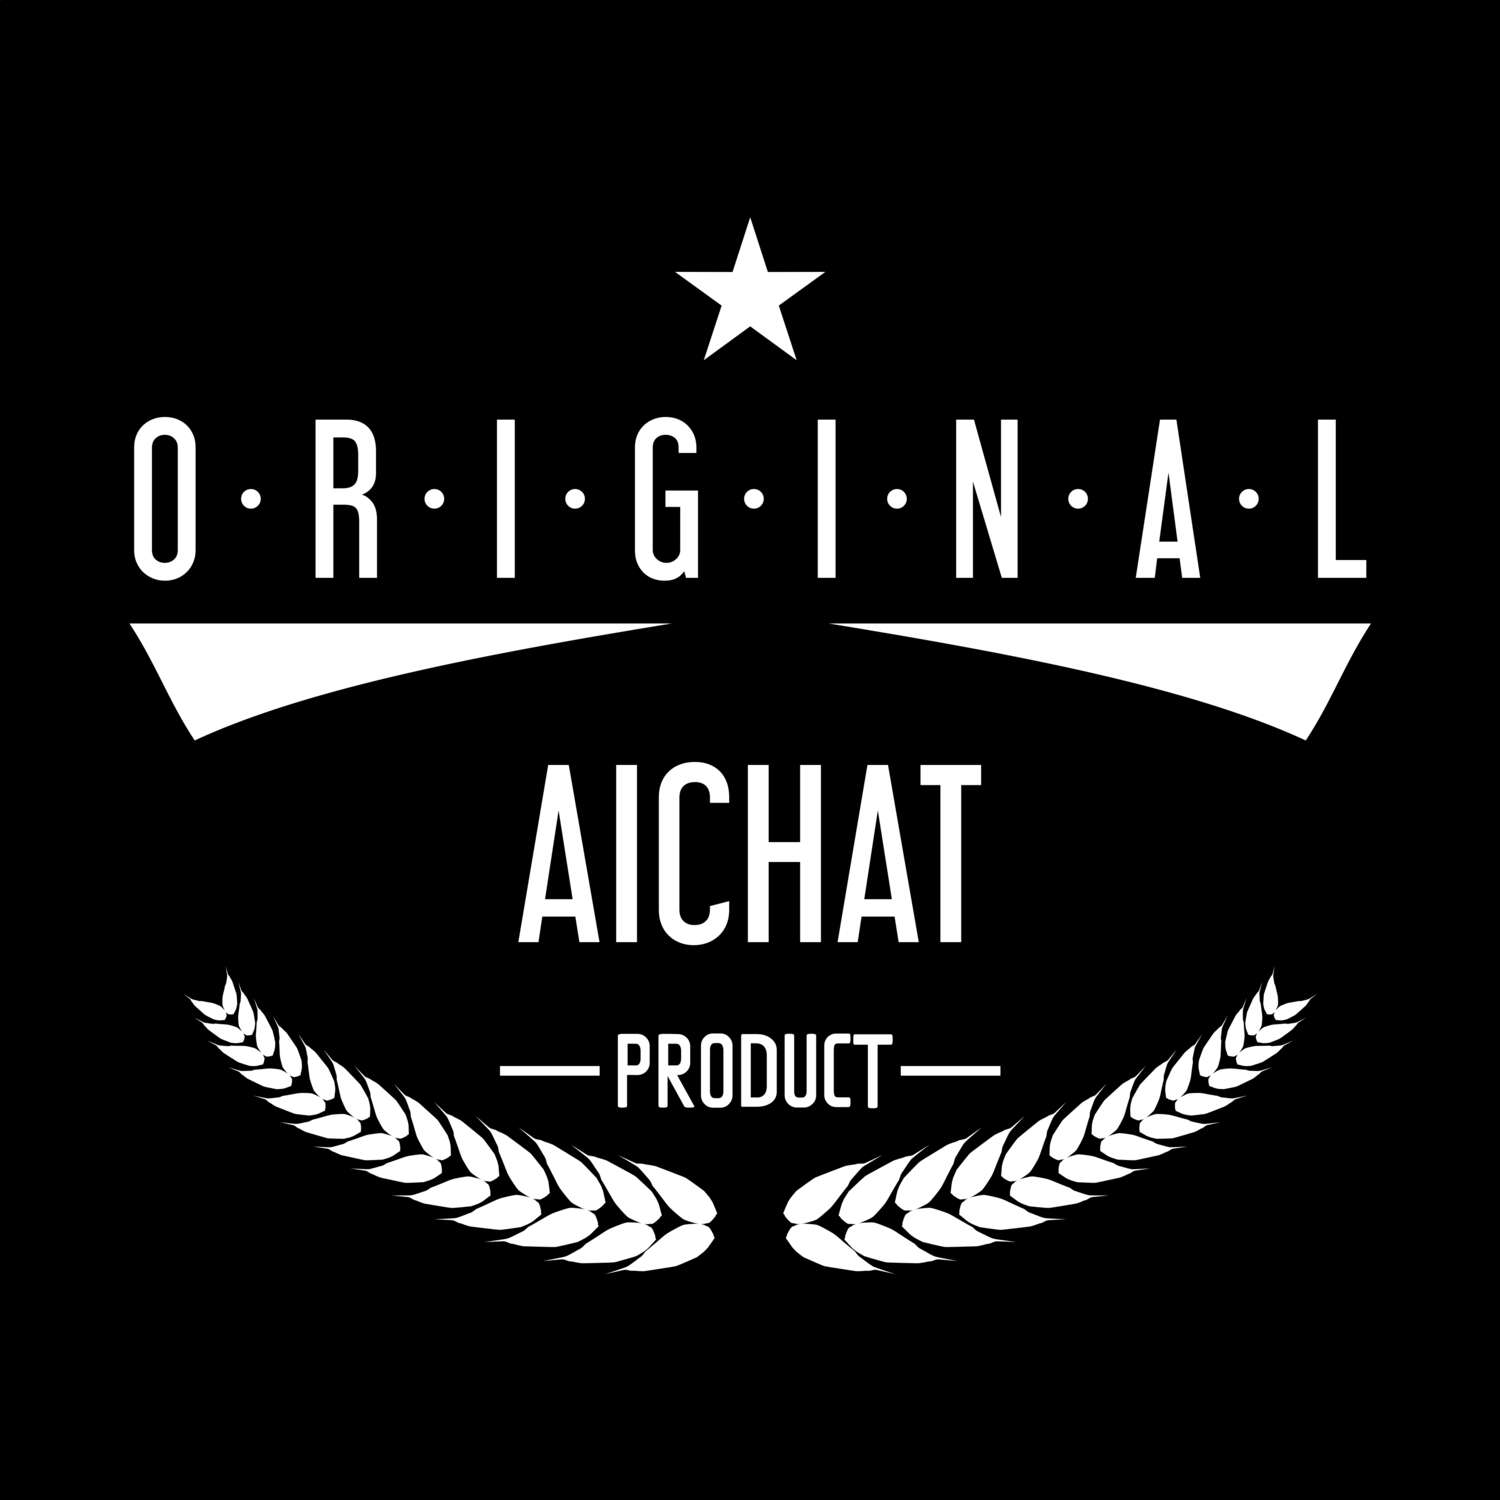 Aichat T-Shirt »Original Product«